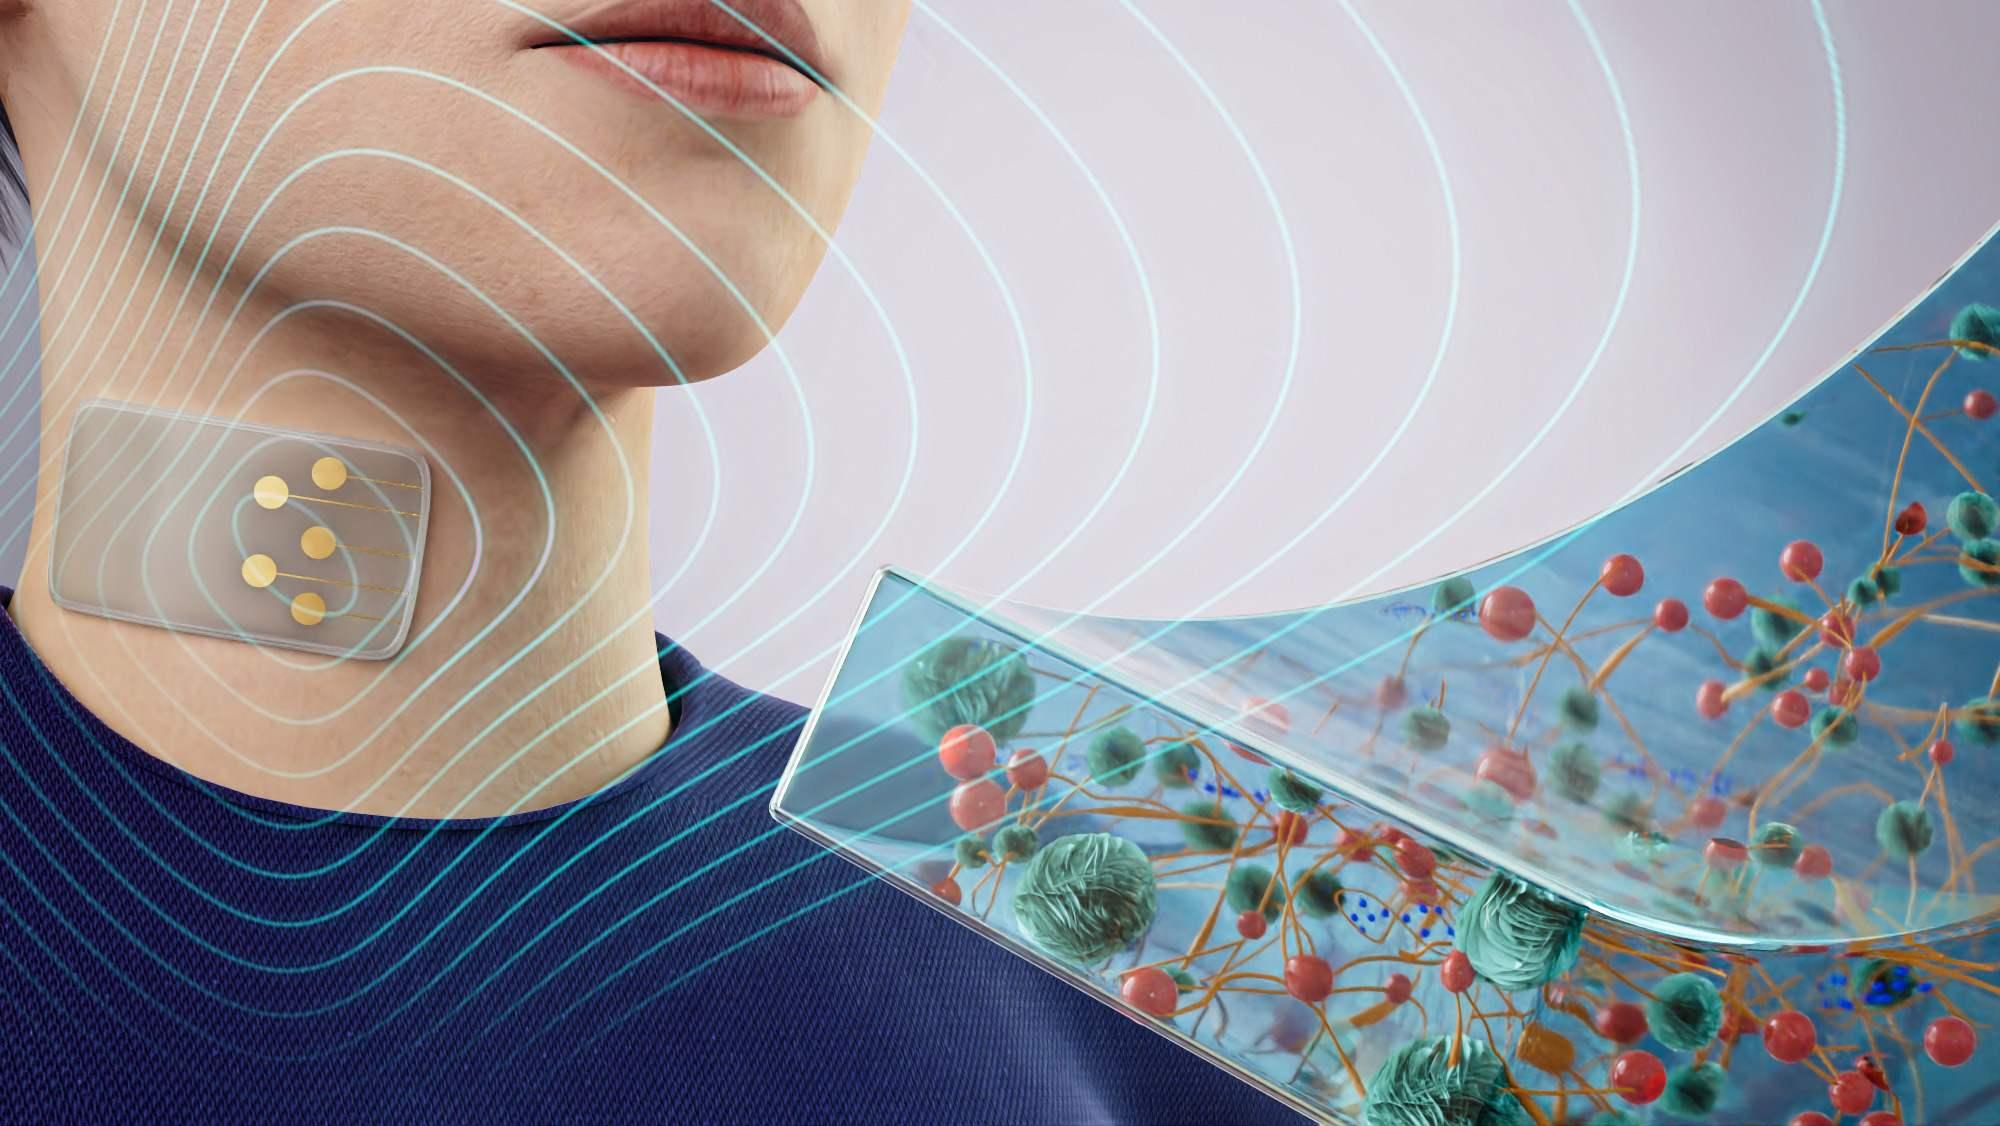 3D-printed electronic skin that can flex, stretch and sense like human skin